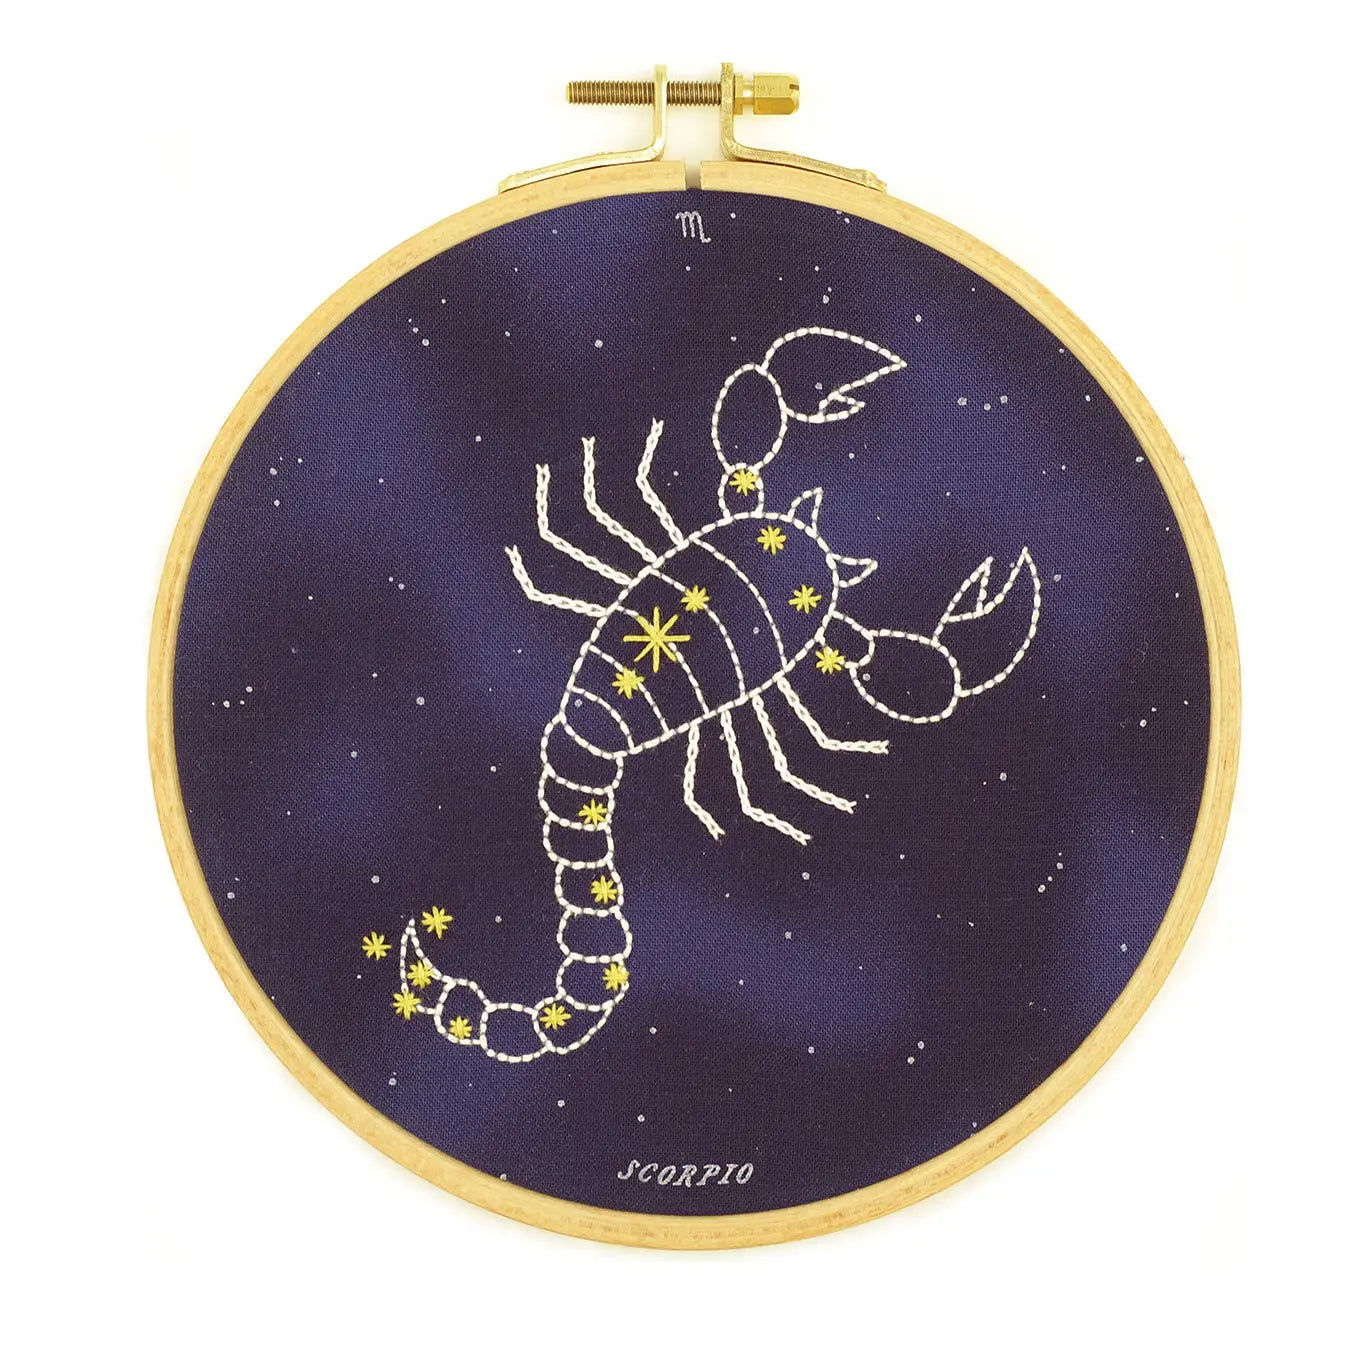 Scorpio embroidery hoop kit